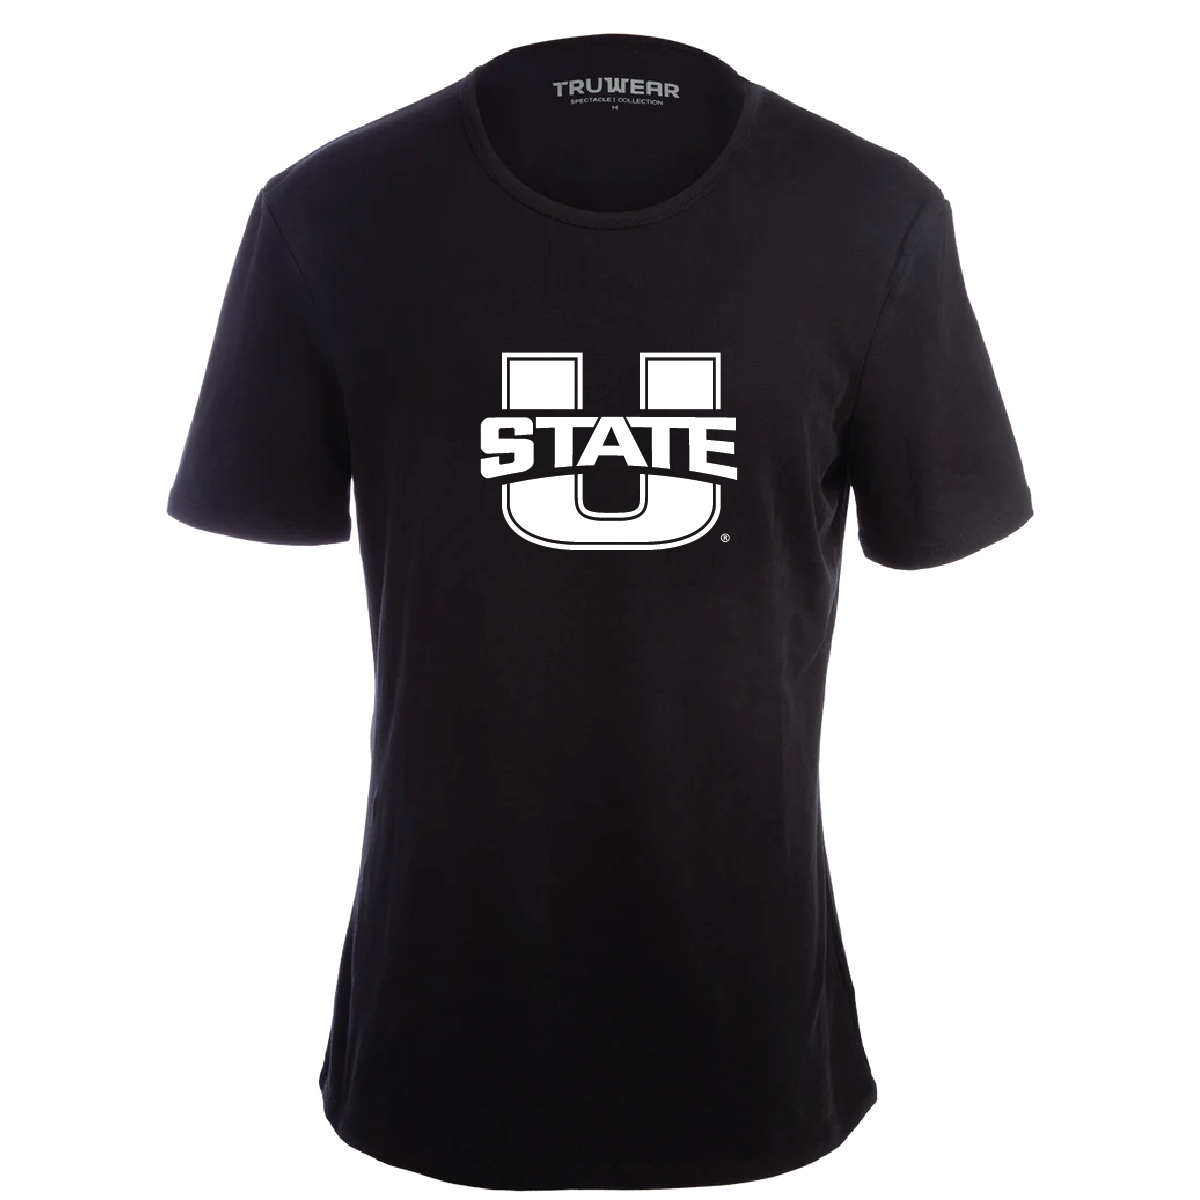 USU Large U-State Spectacle Black T-Shirt